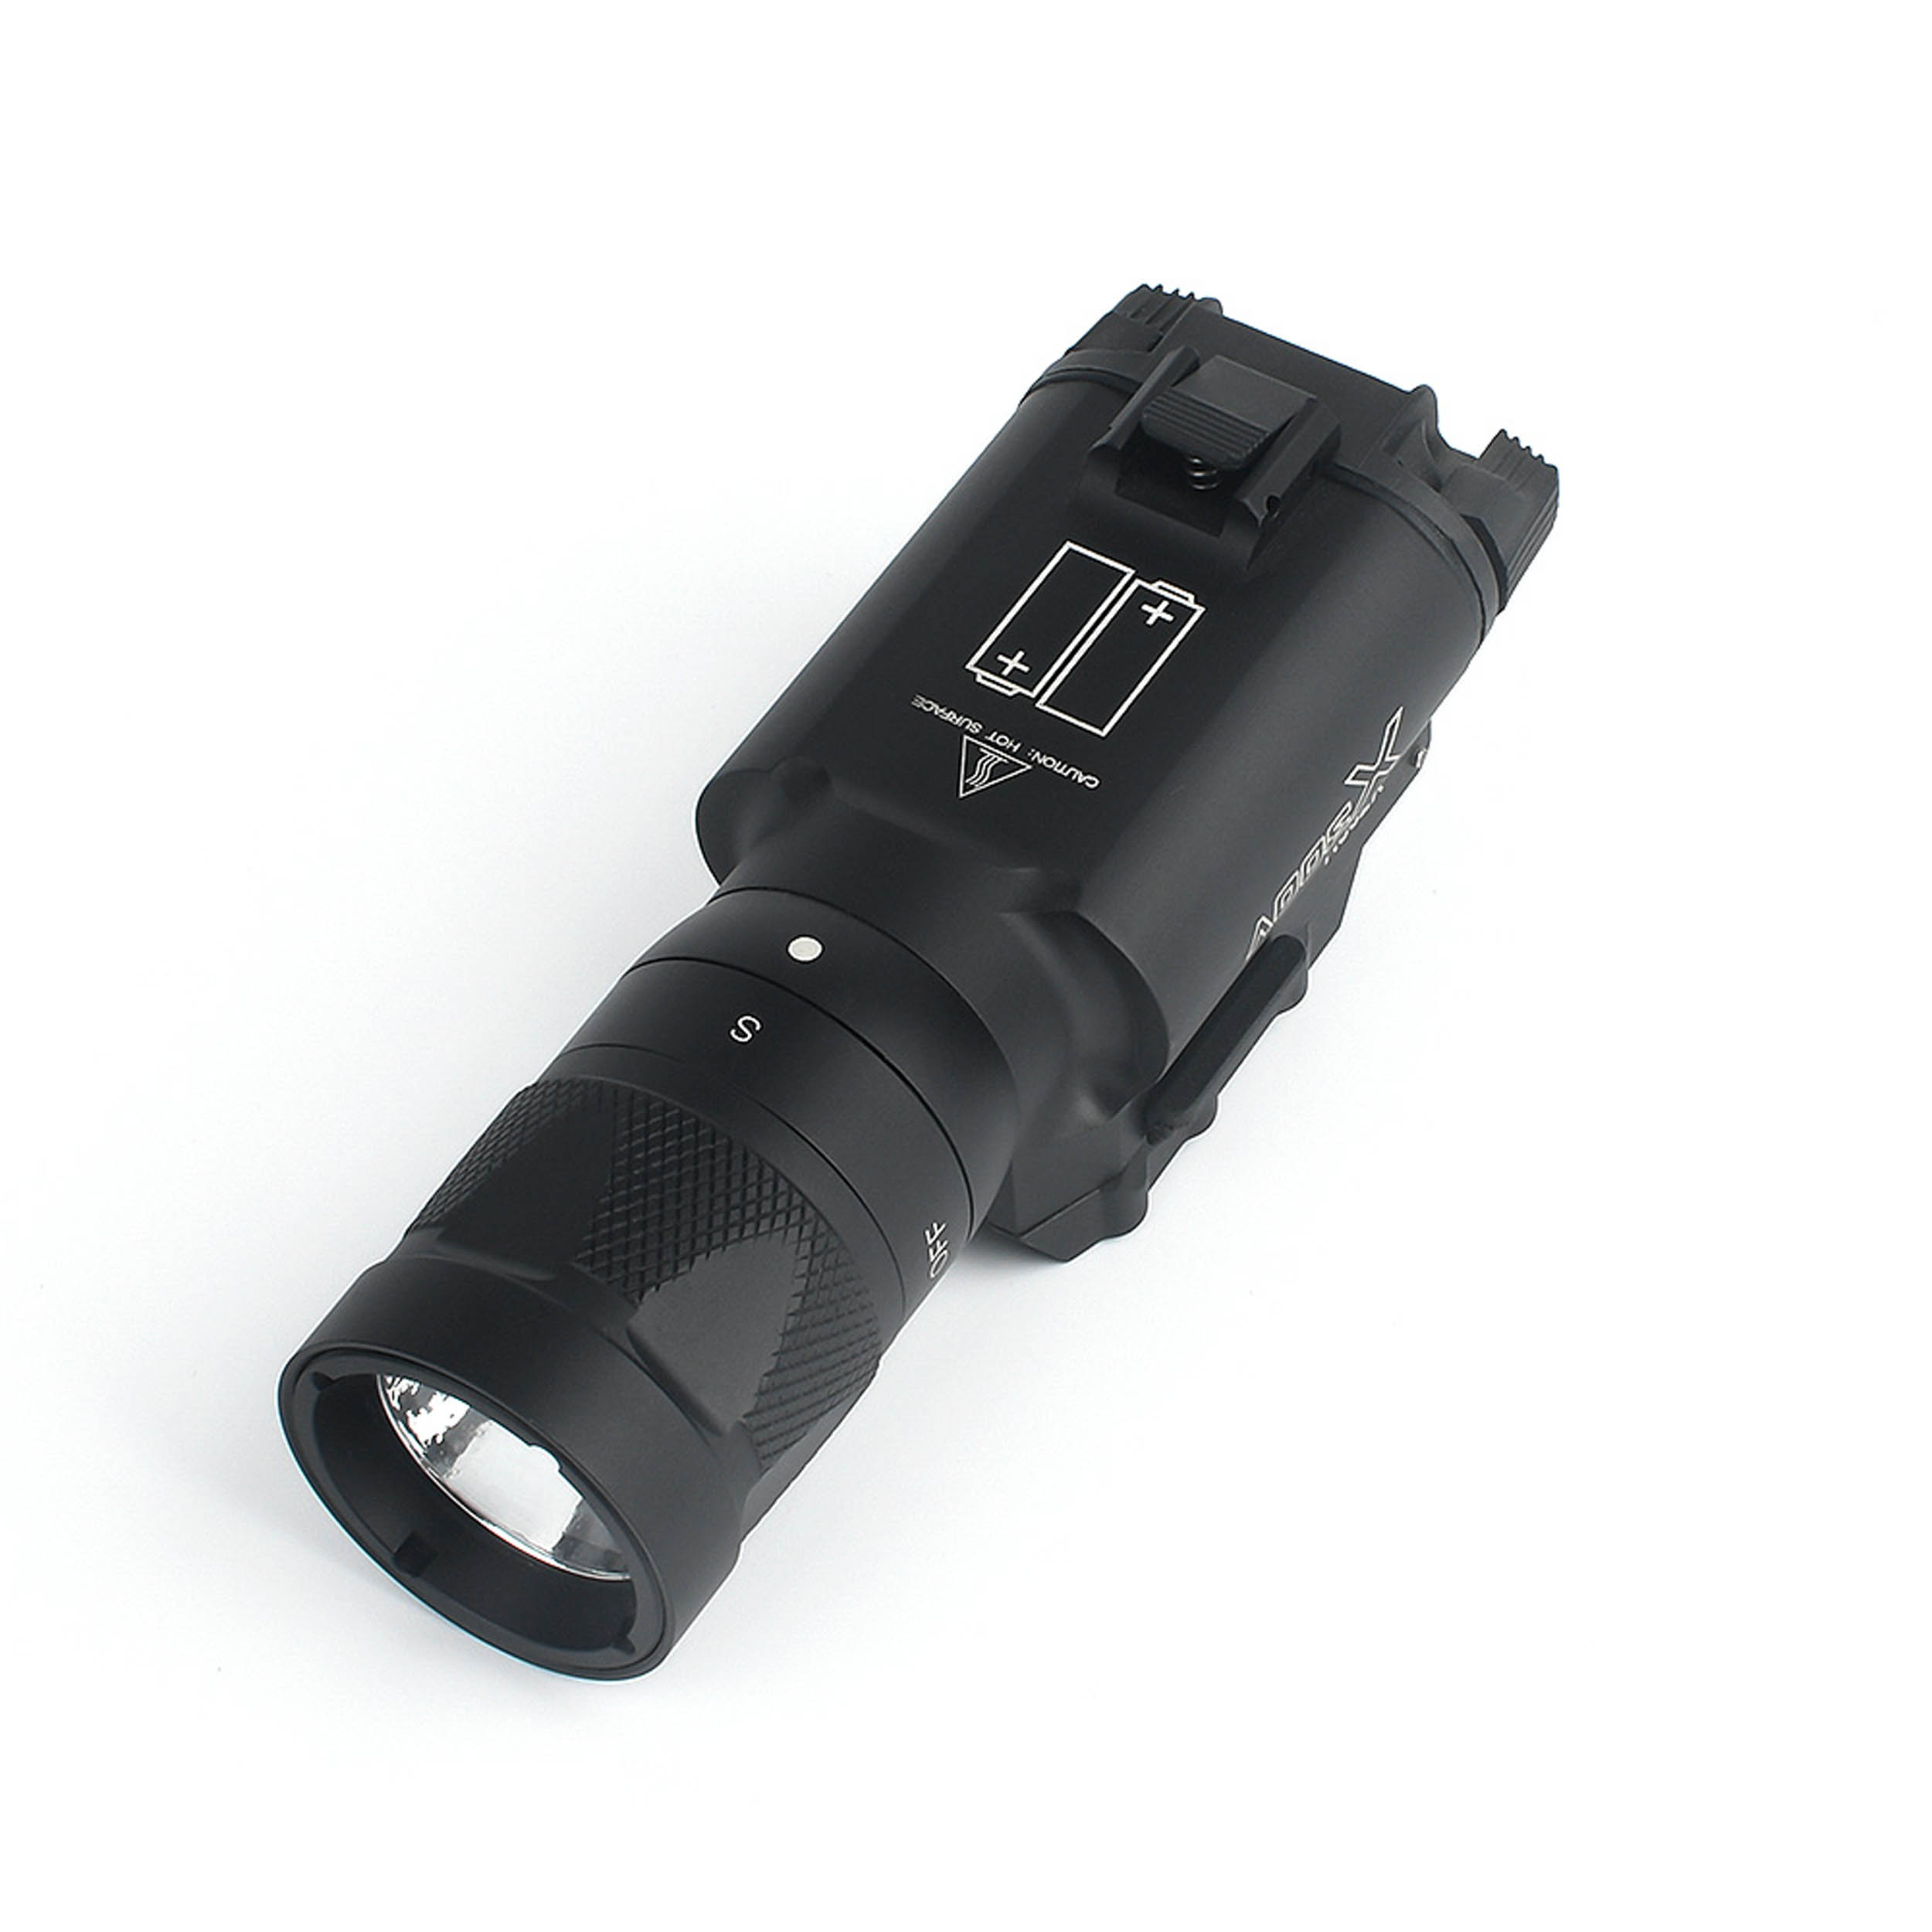 A61164-1 Lampe LED pistolet BO X300 Stroboscopic 220 lumens - A61164